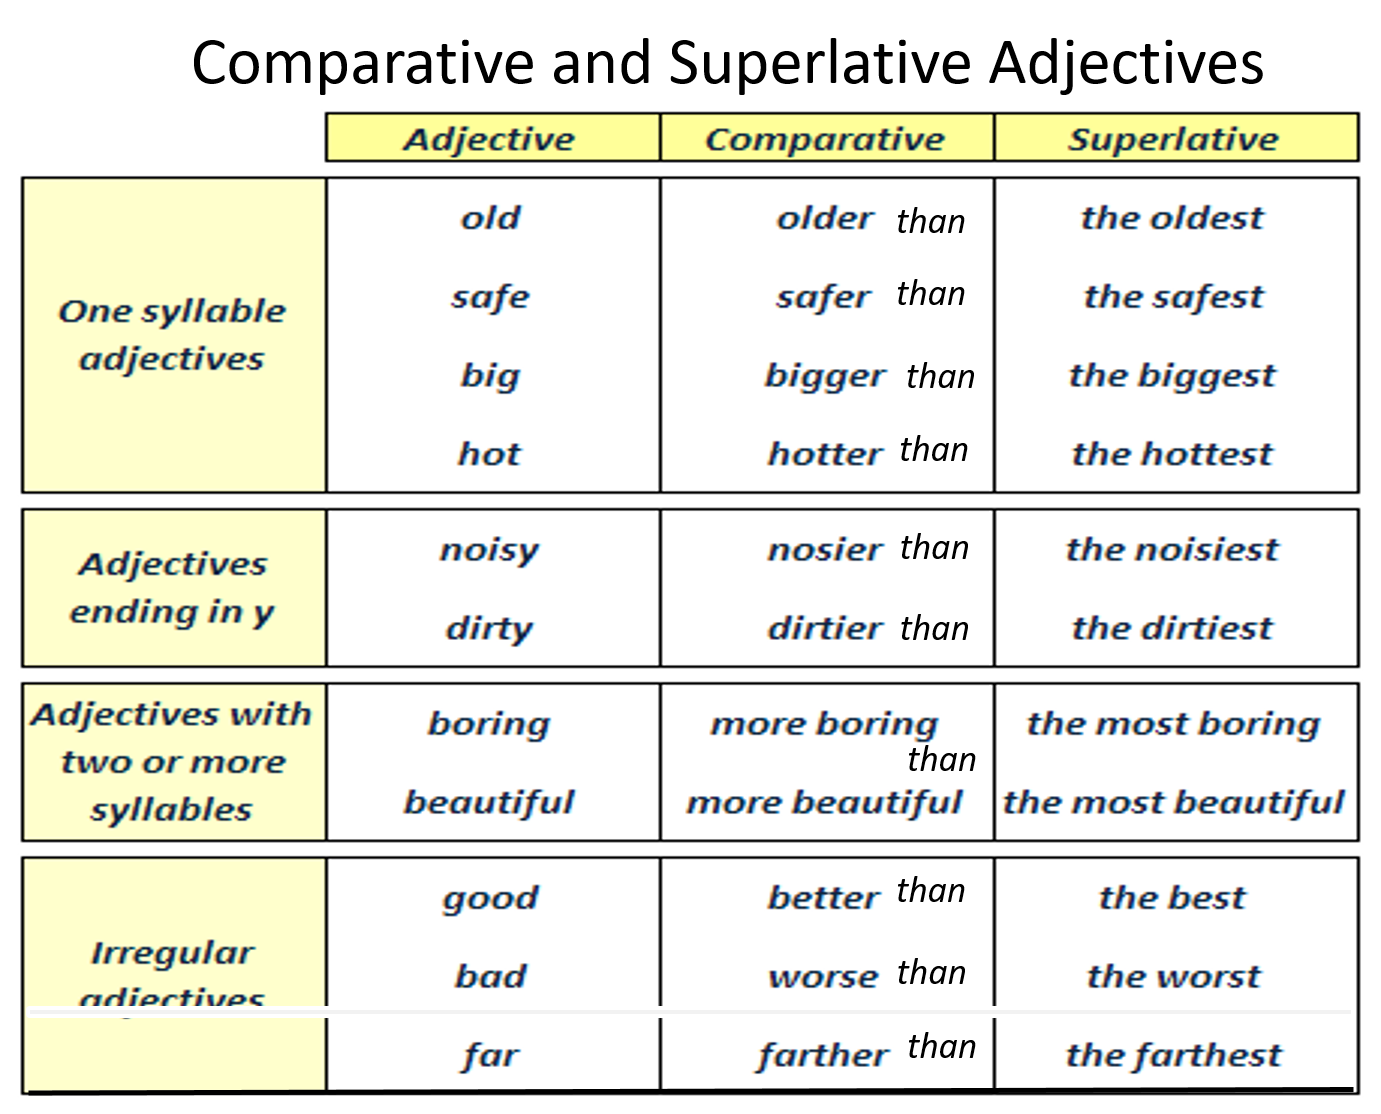 miss-amida-s-third-grade-adjectives